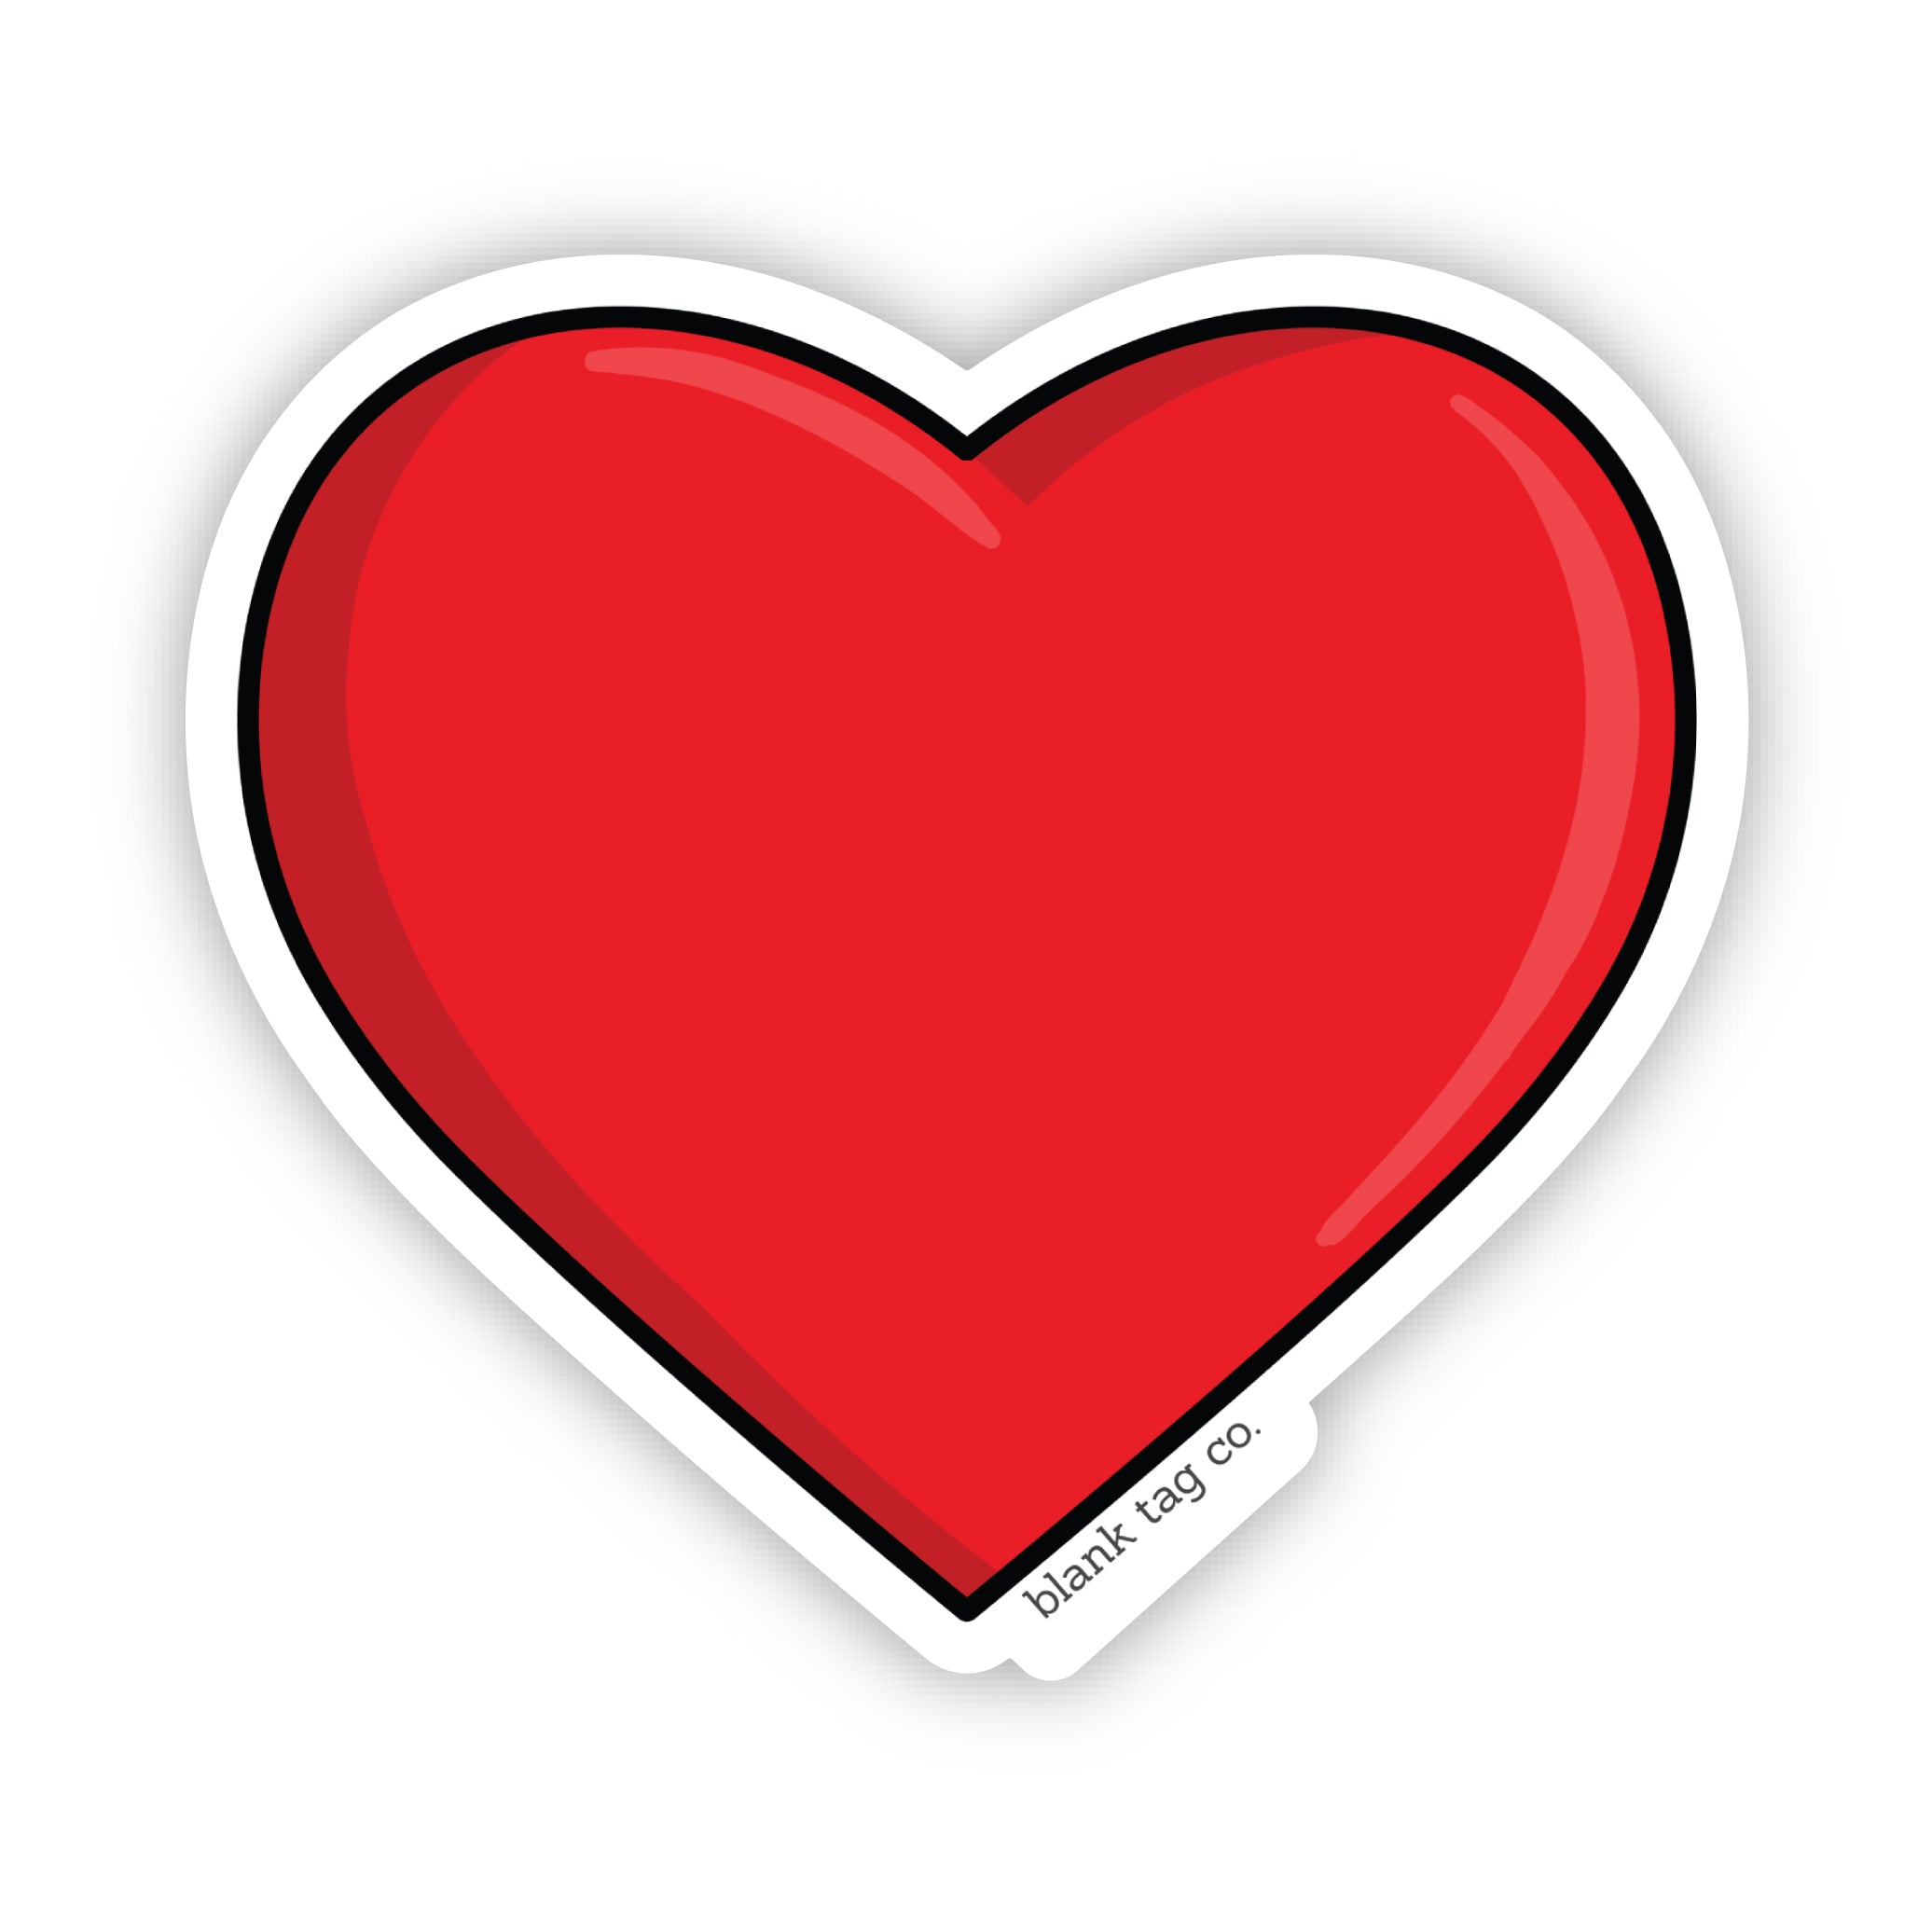 The Heart Sticker